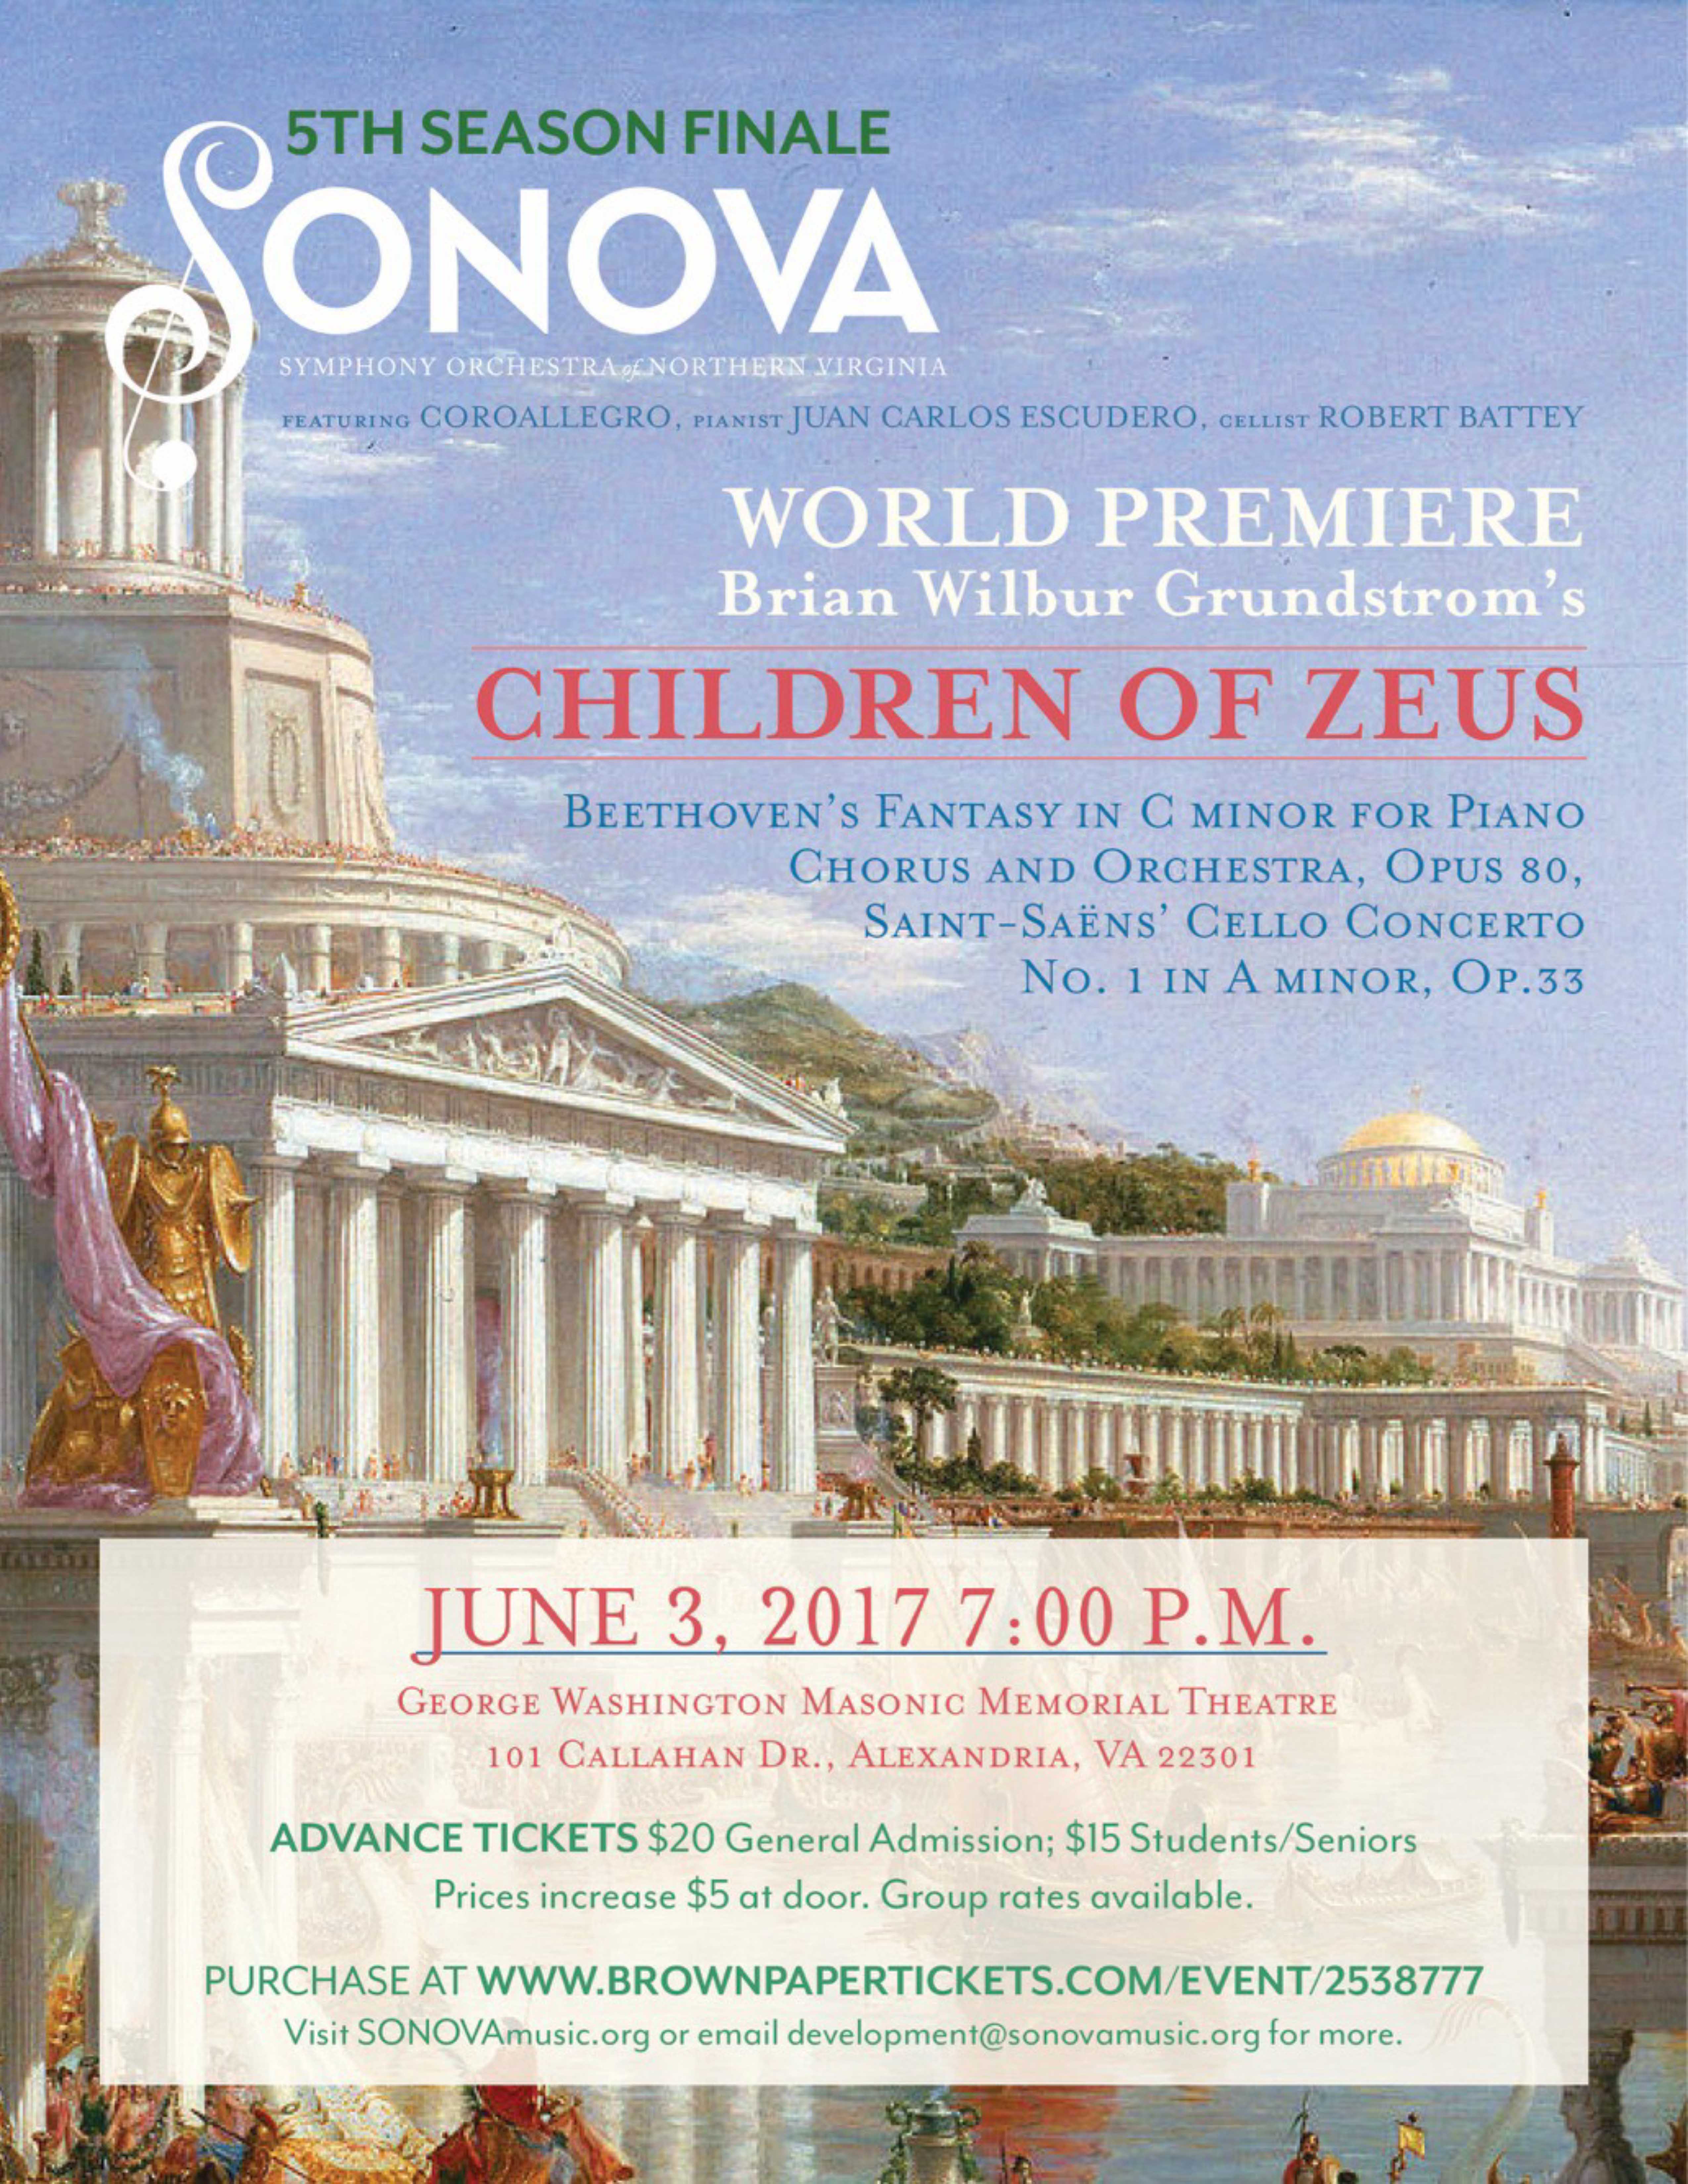 Symphony Orchestra of Northern Virginia Premieres Brian Wilbur Grundstrom's Children of Zeus